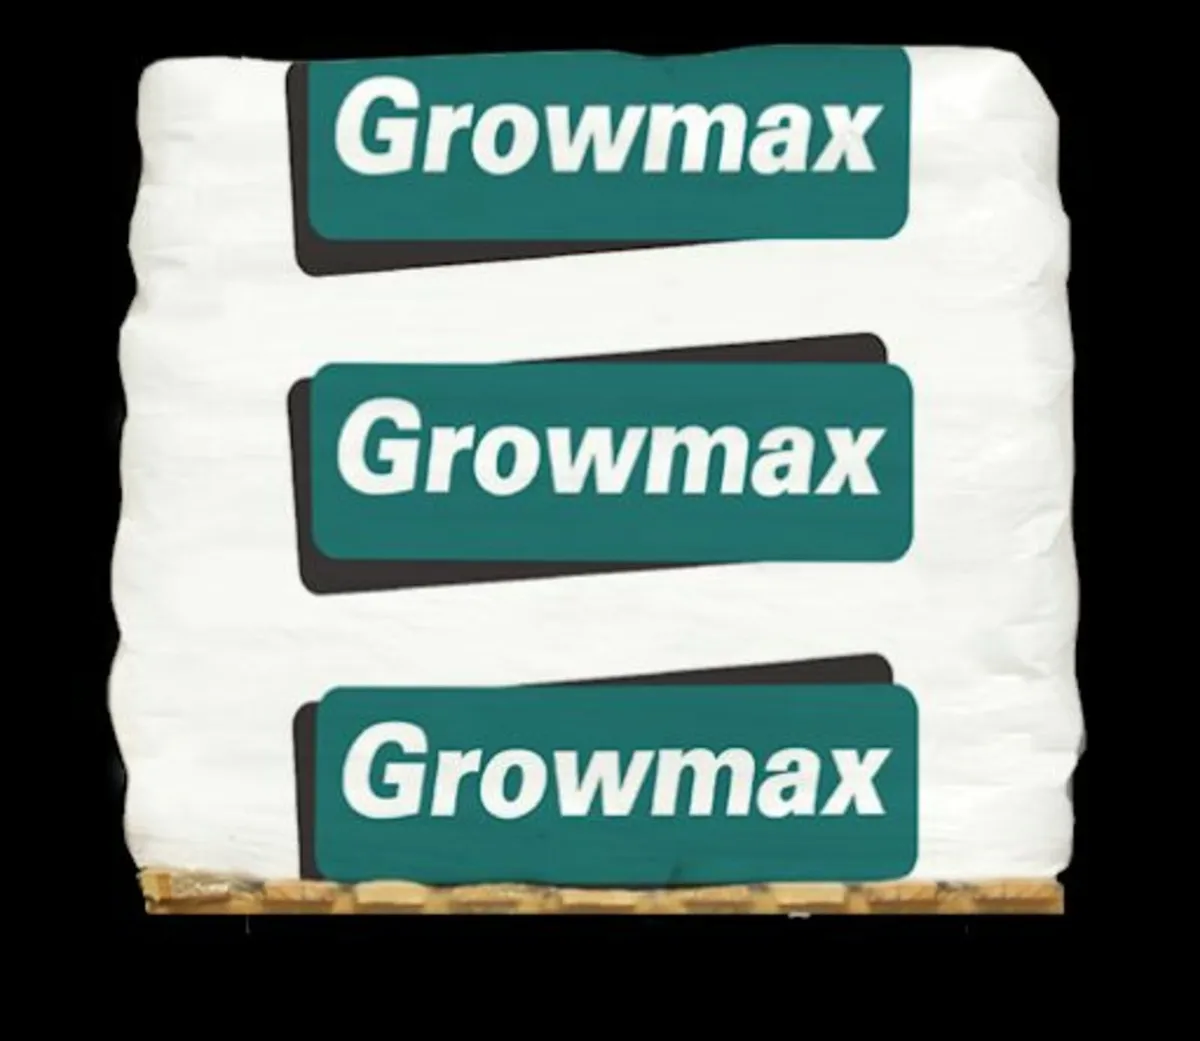 Growmax Granulated Lime